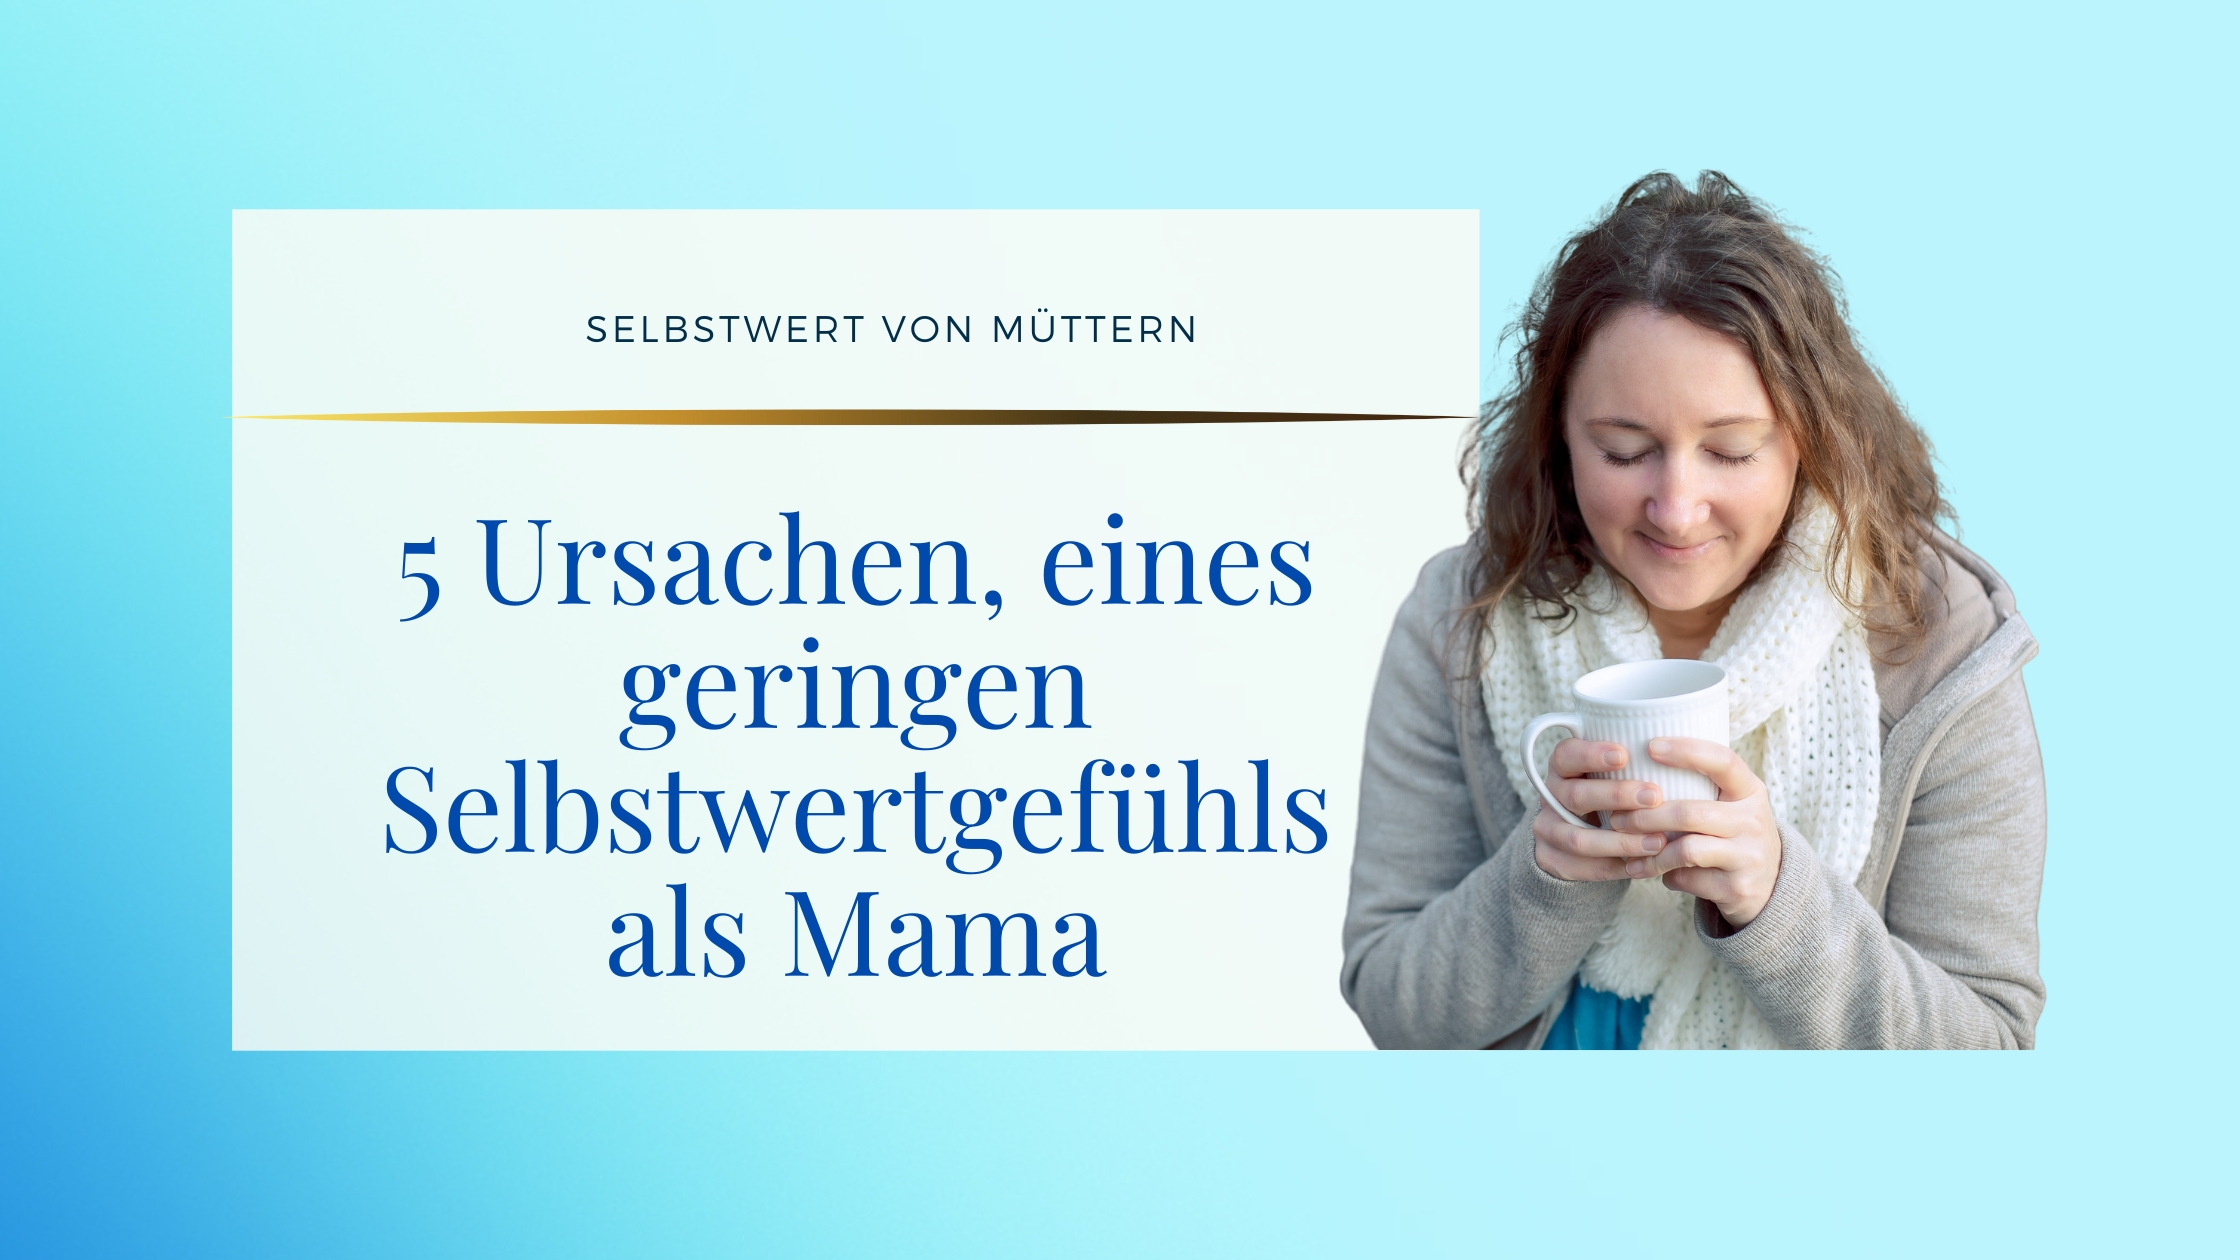 Geringes Sebstwertgefühl als Mama ©Susanne Reinhold